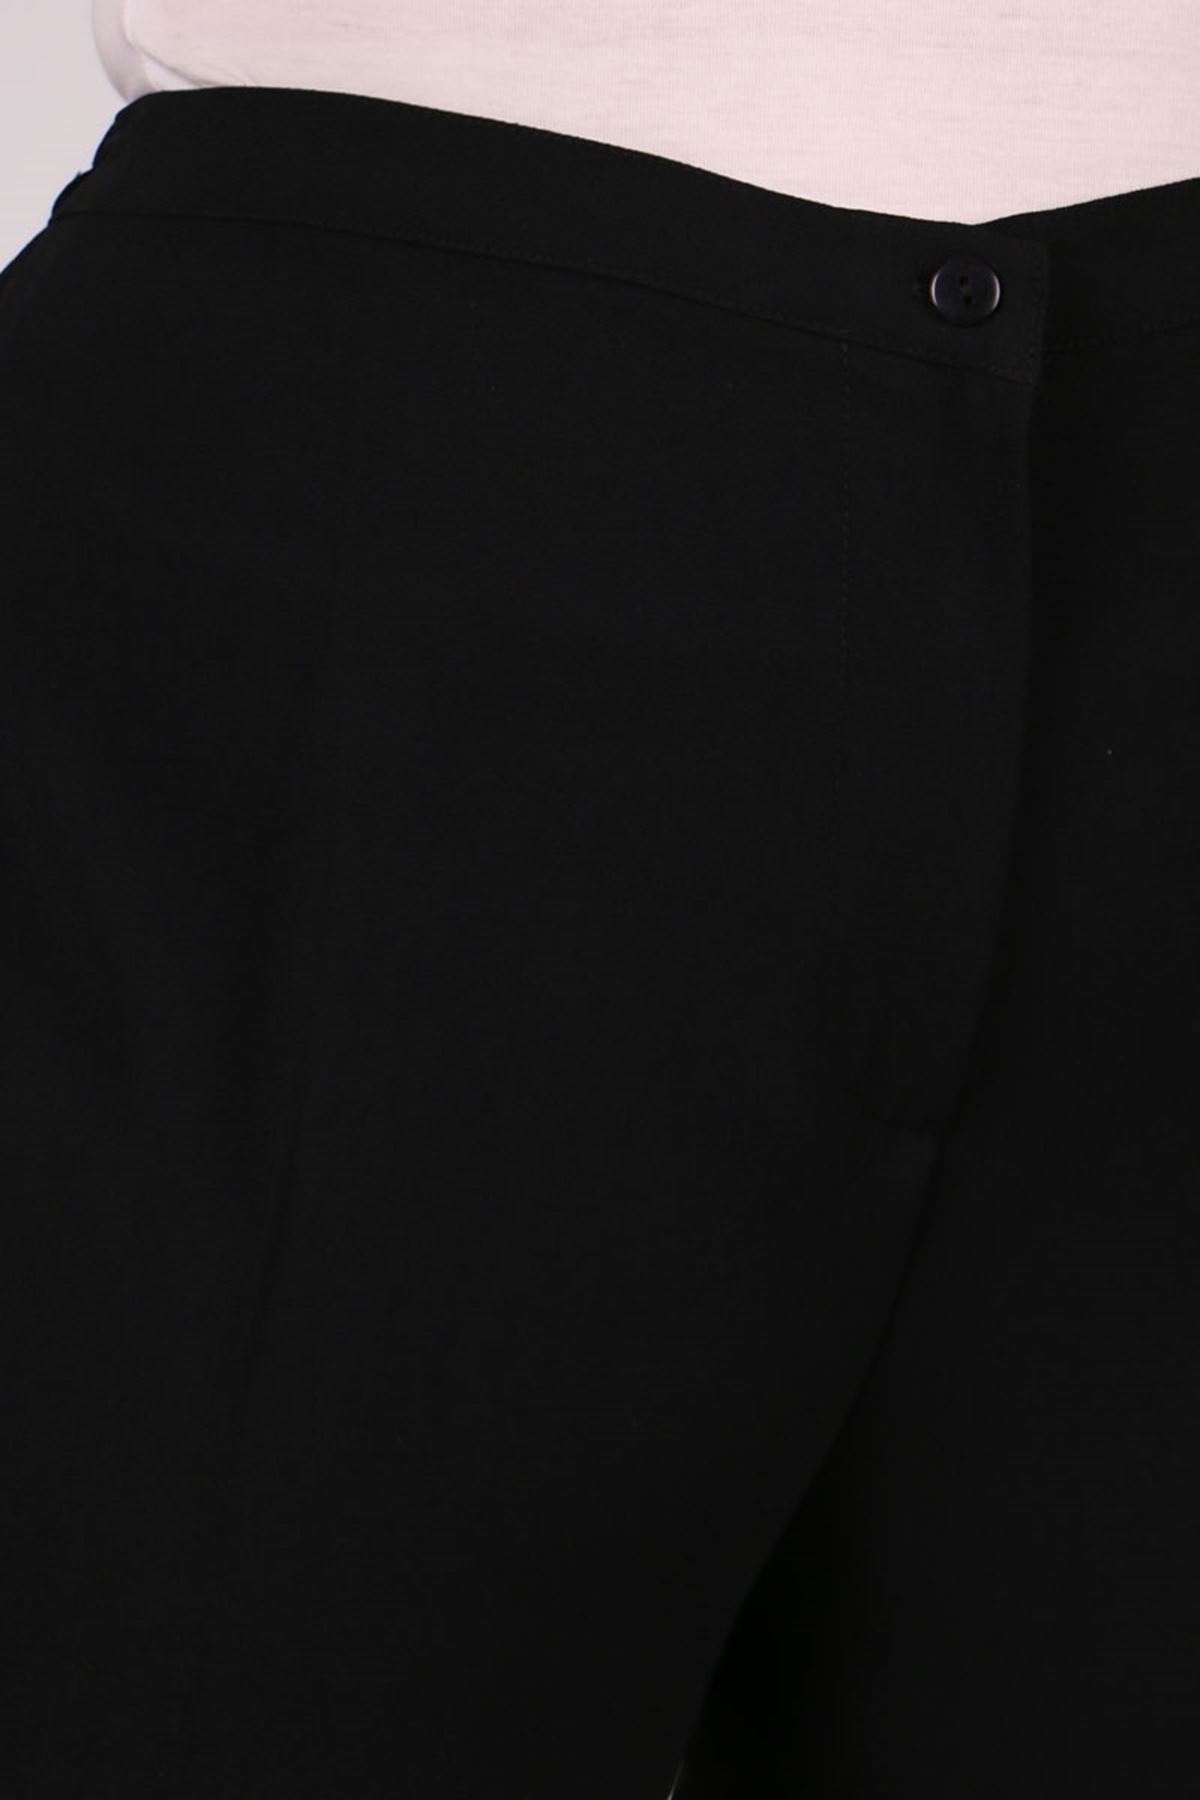 29017 Büyük Beden Beli Lastikli Çift Kat Krep Pantolon - Siyah